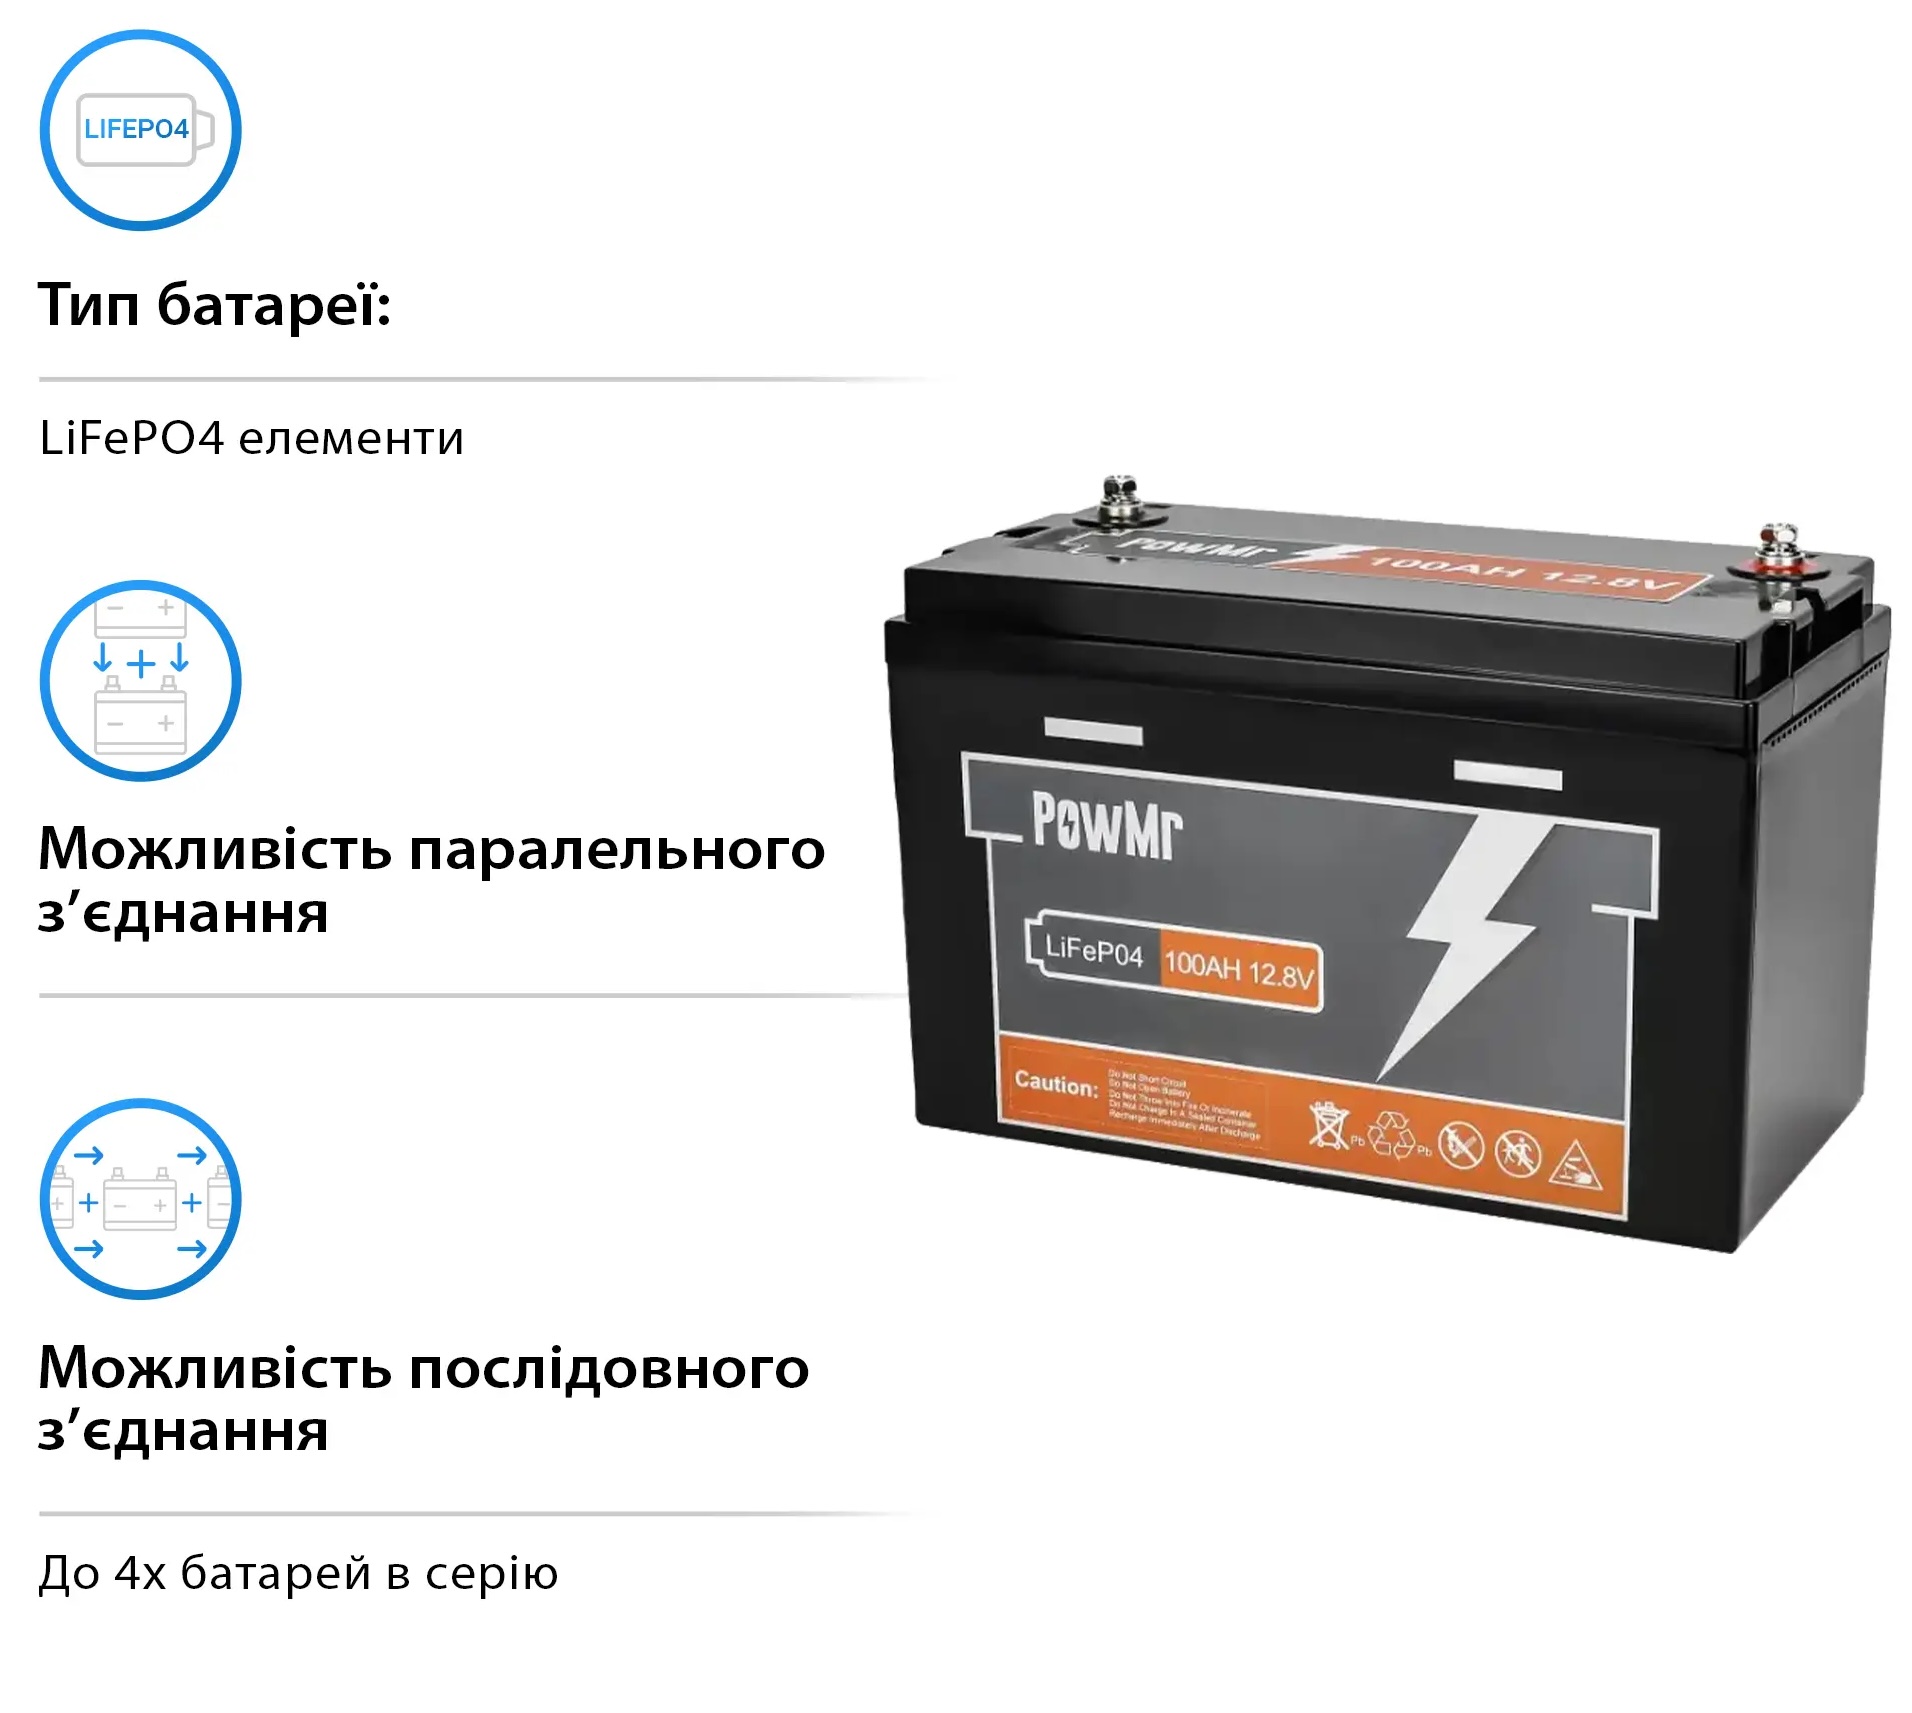 Аккумуляторная батарея PowMr 12.8V 100Ah LiFePo4 (POW-100AH-12V) цена 19680.00 грн - фотография 2